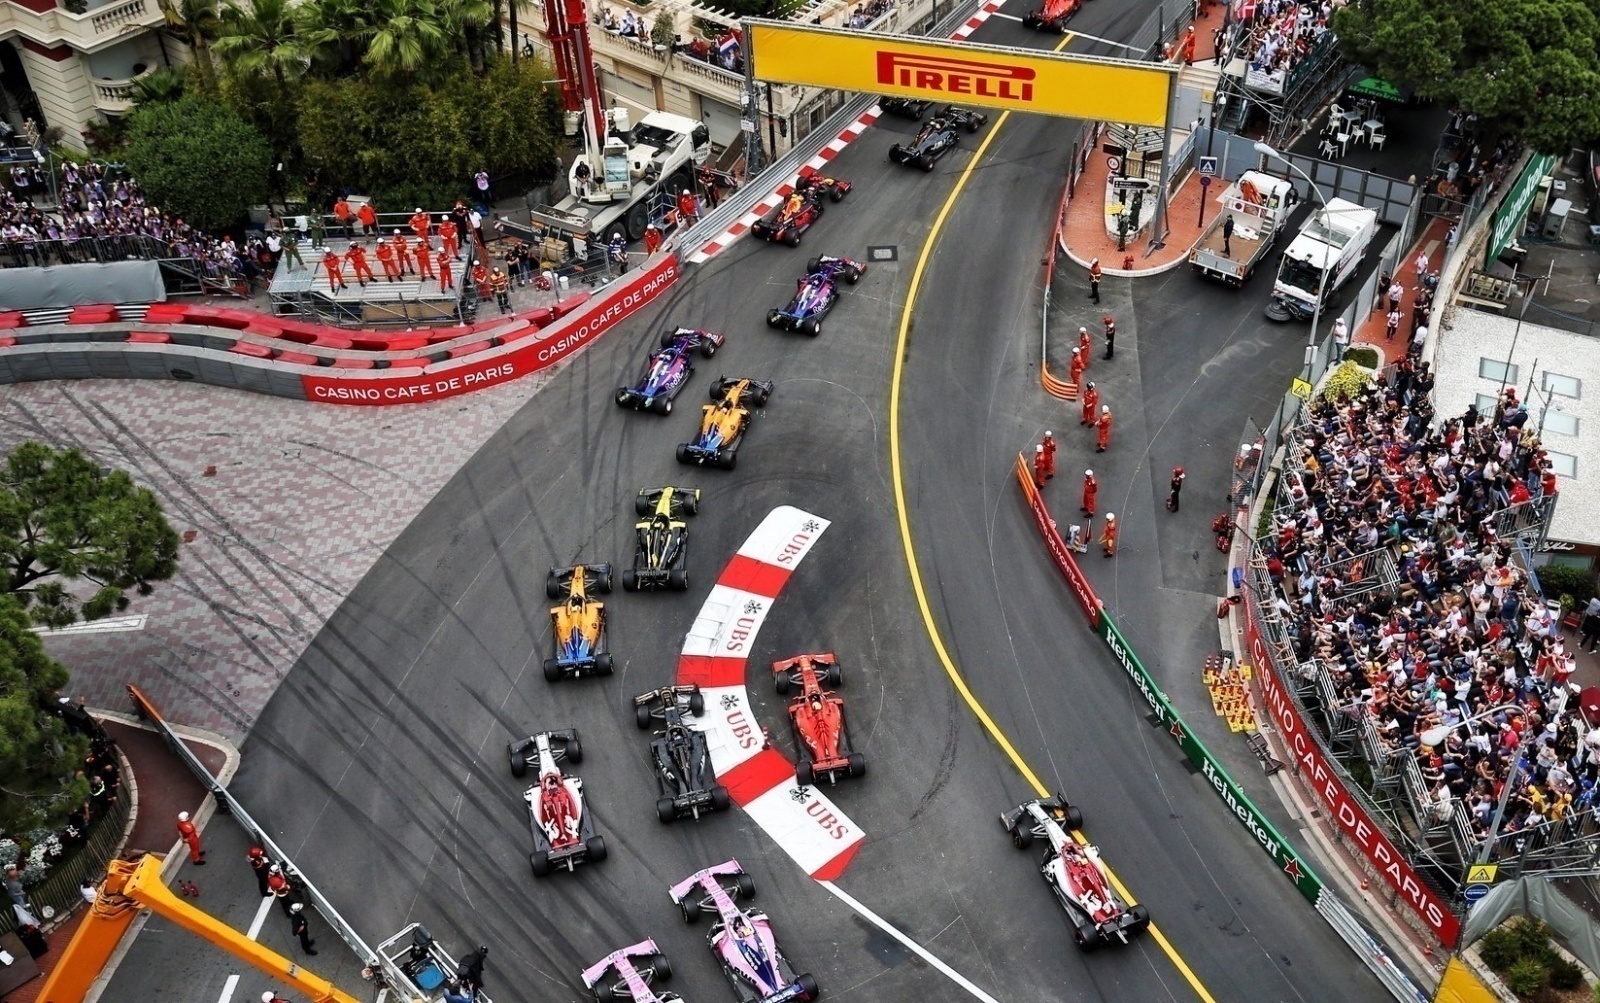 Monaco Grand Prix: Leclerc on pole position despite crash